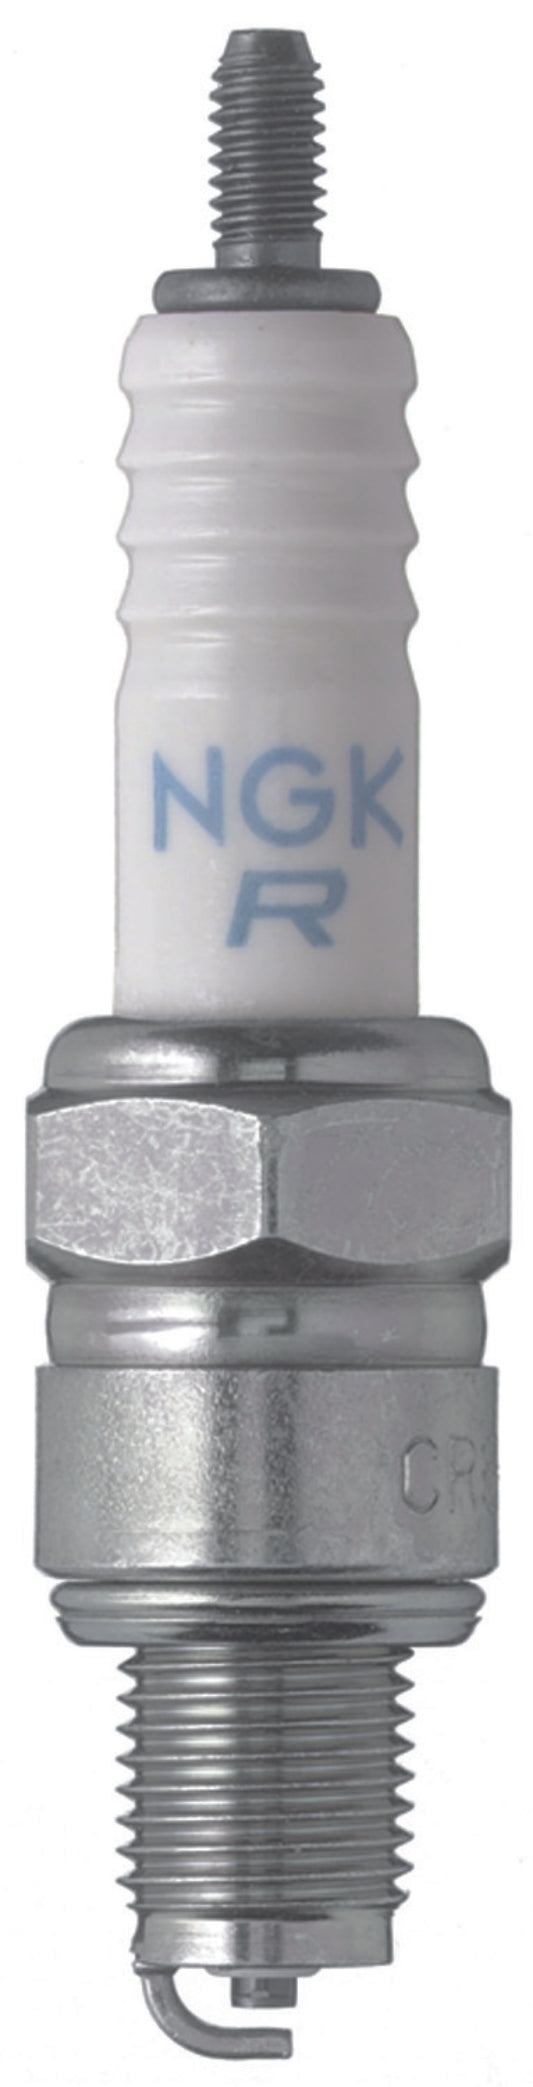 NGK Standard Spark Plug Box of 4 (CR7HS)